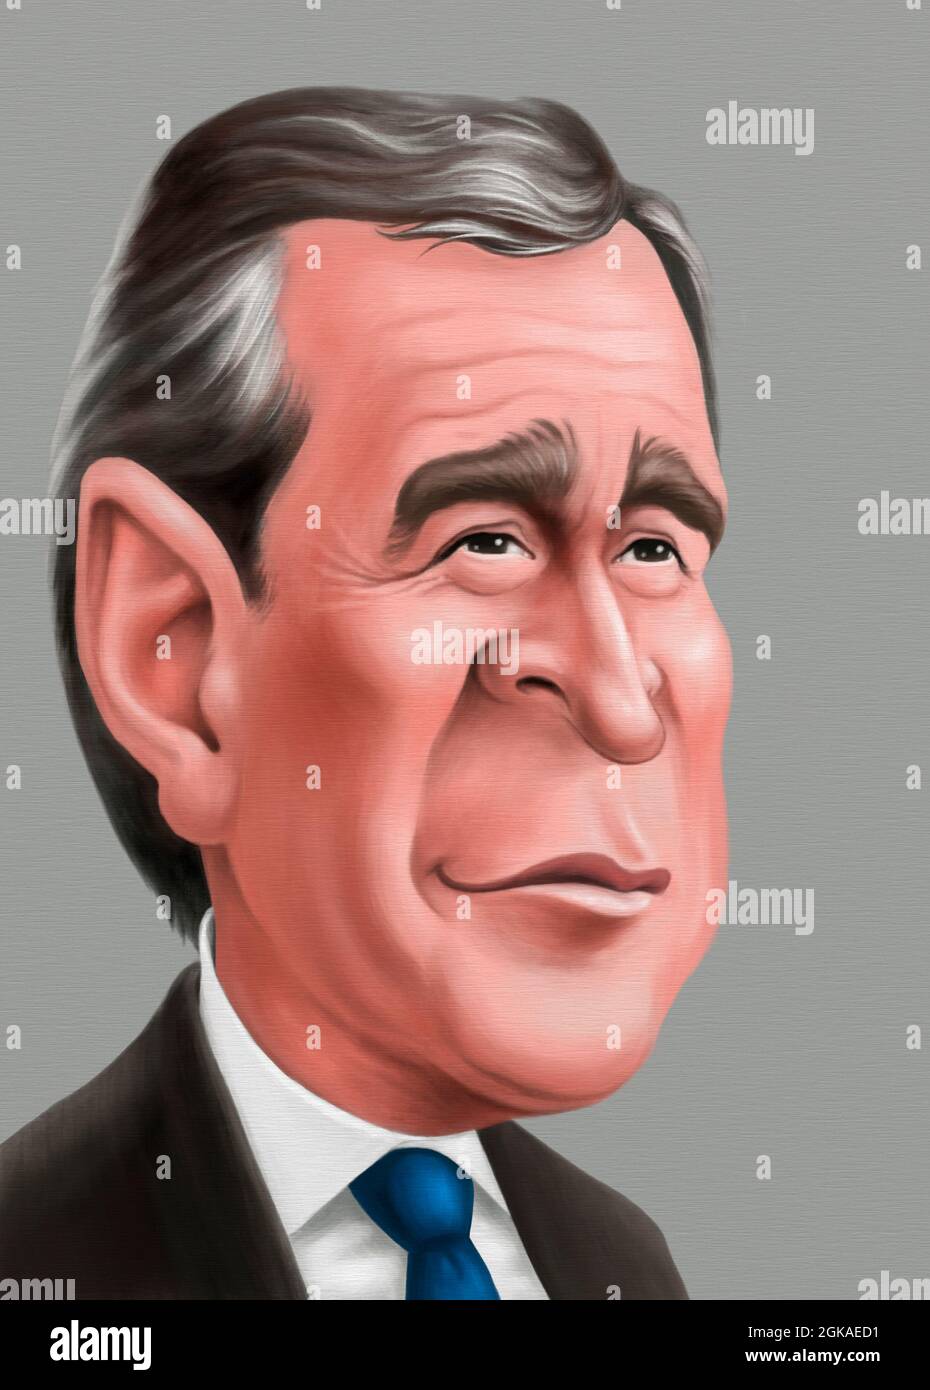 George W.Bush caricature Stock Photo